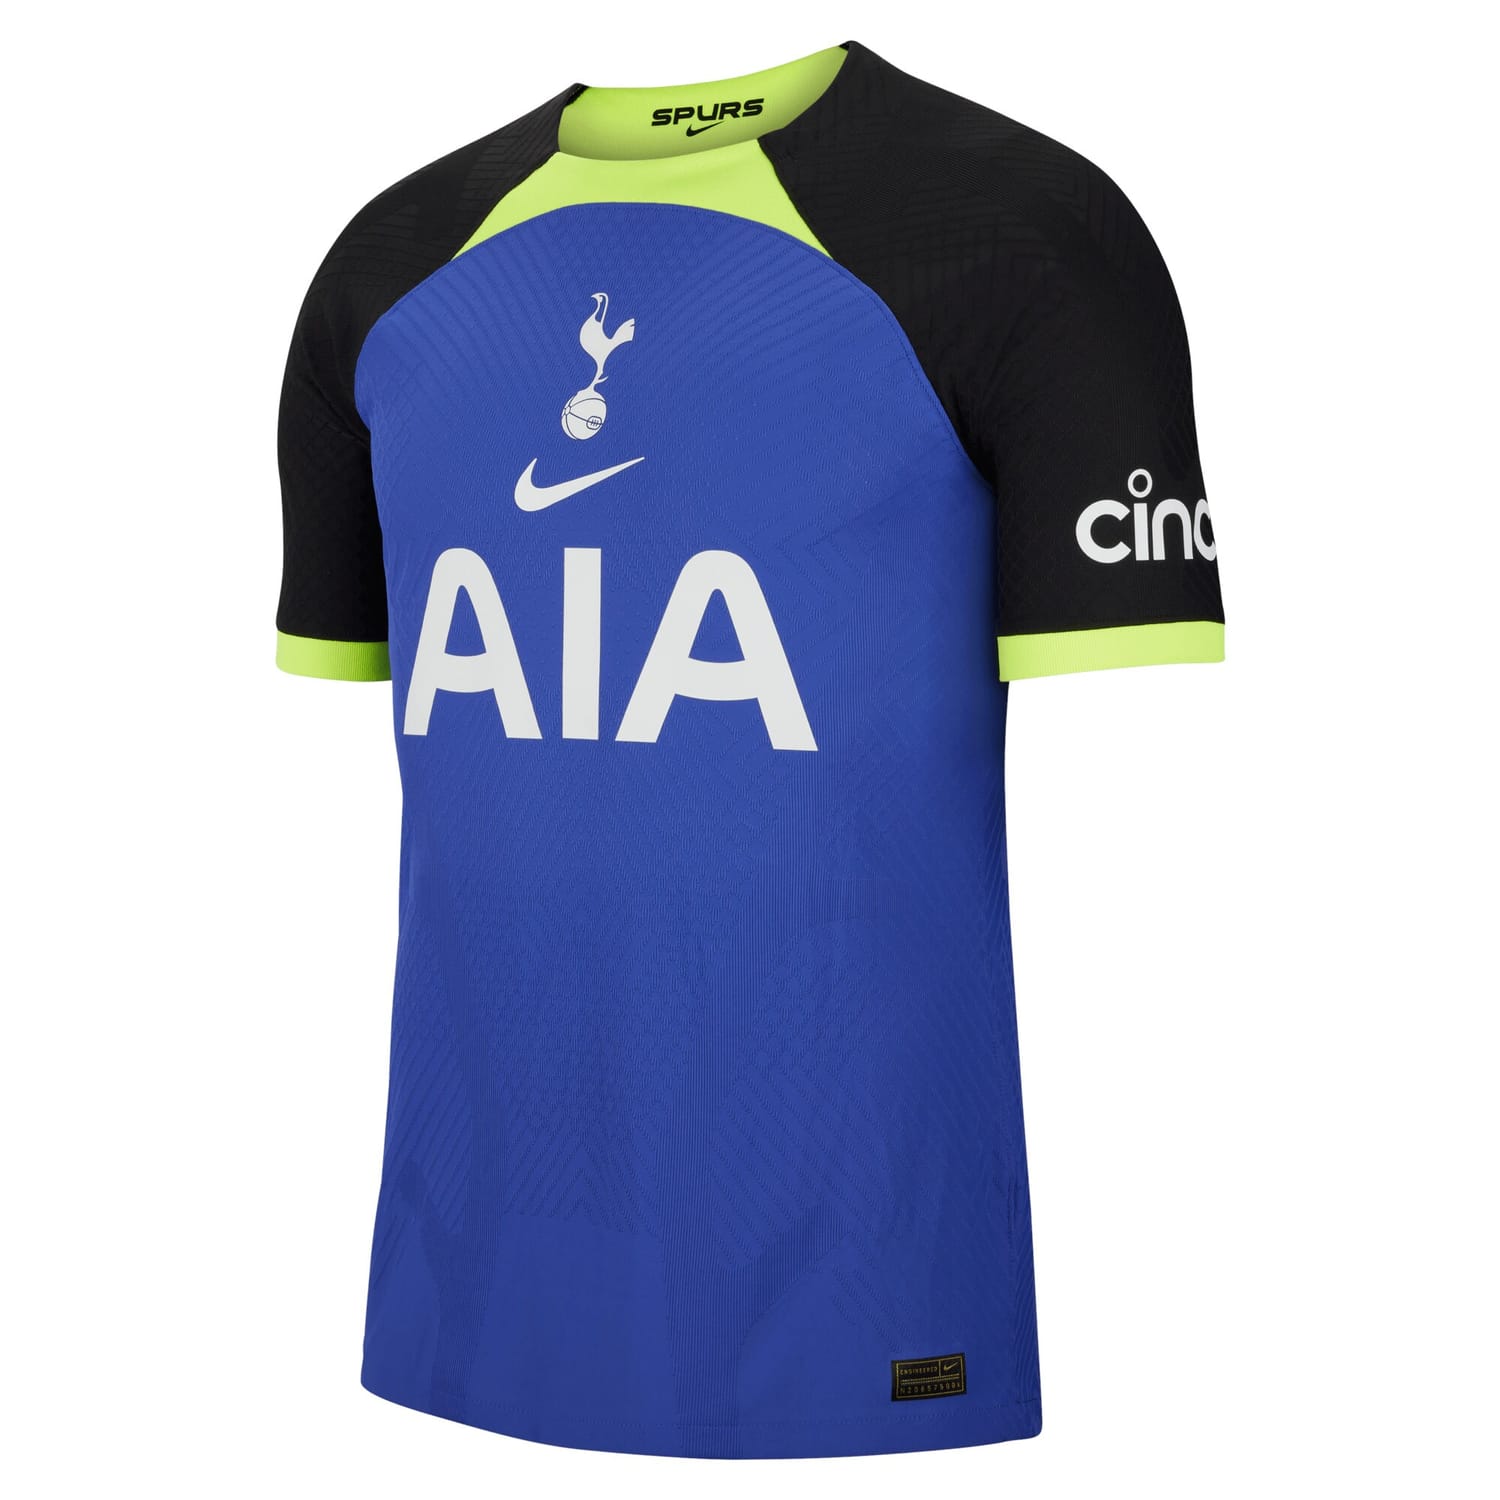 Premier League Tottenham Hotspur Away Authentic Jersey Shirt 2022-23 player Doherty 2 printing for Men